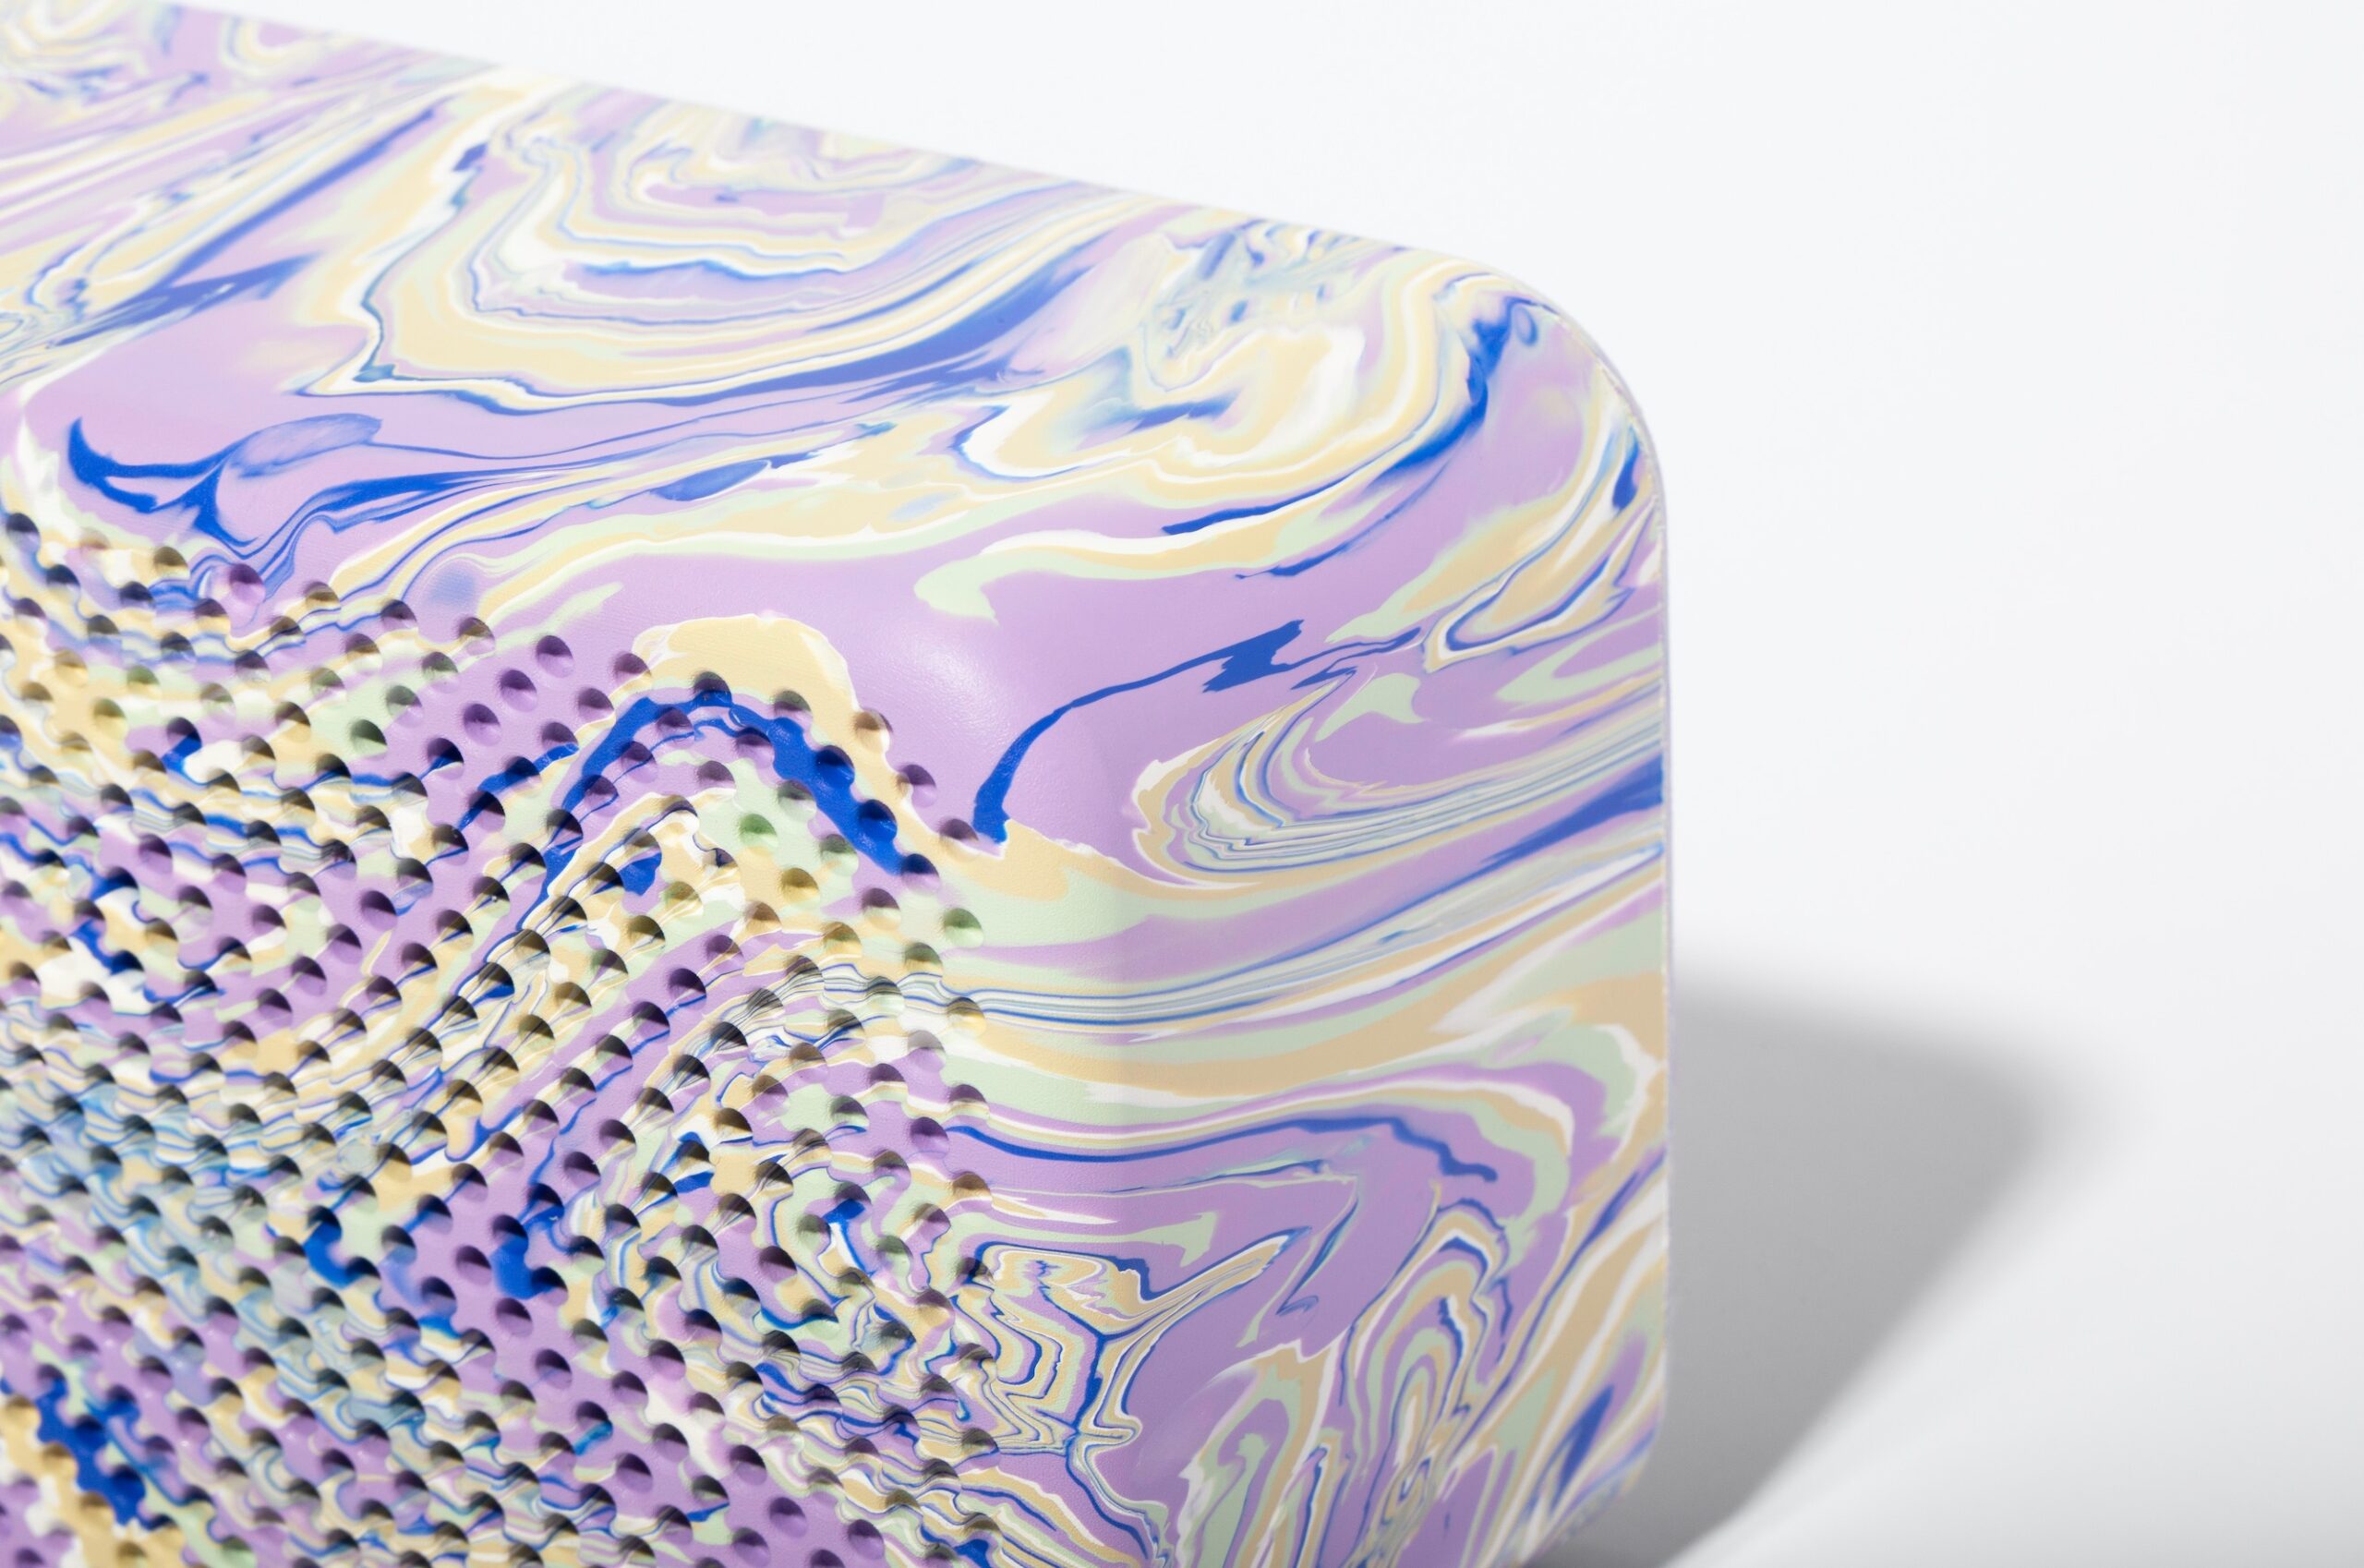 Gomi speaker recycled materials plastic detail purple pattern